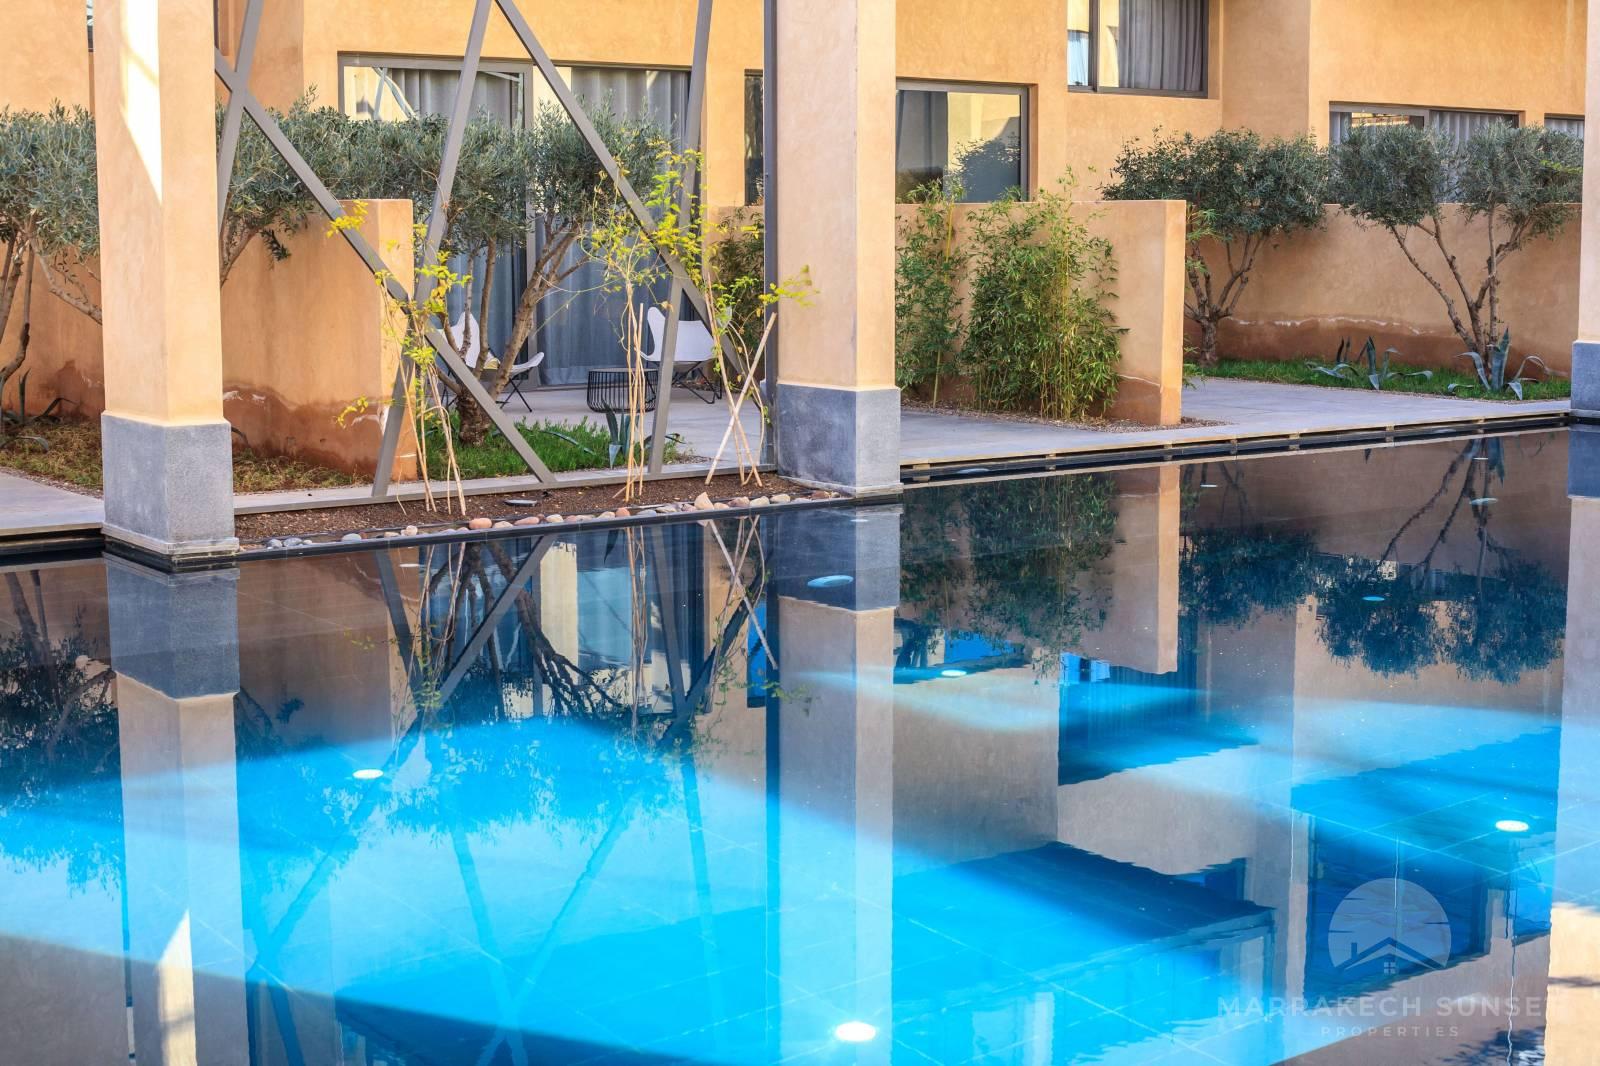  Luxury 1 bedroom Loft apartment for sale in Marrakech 